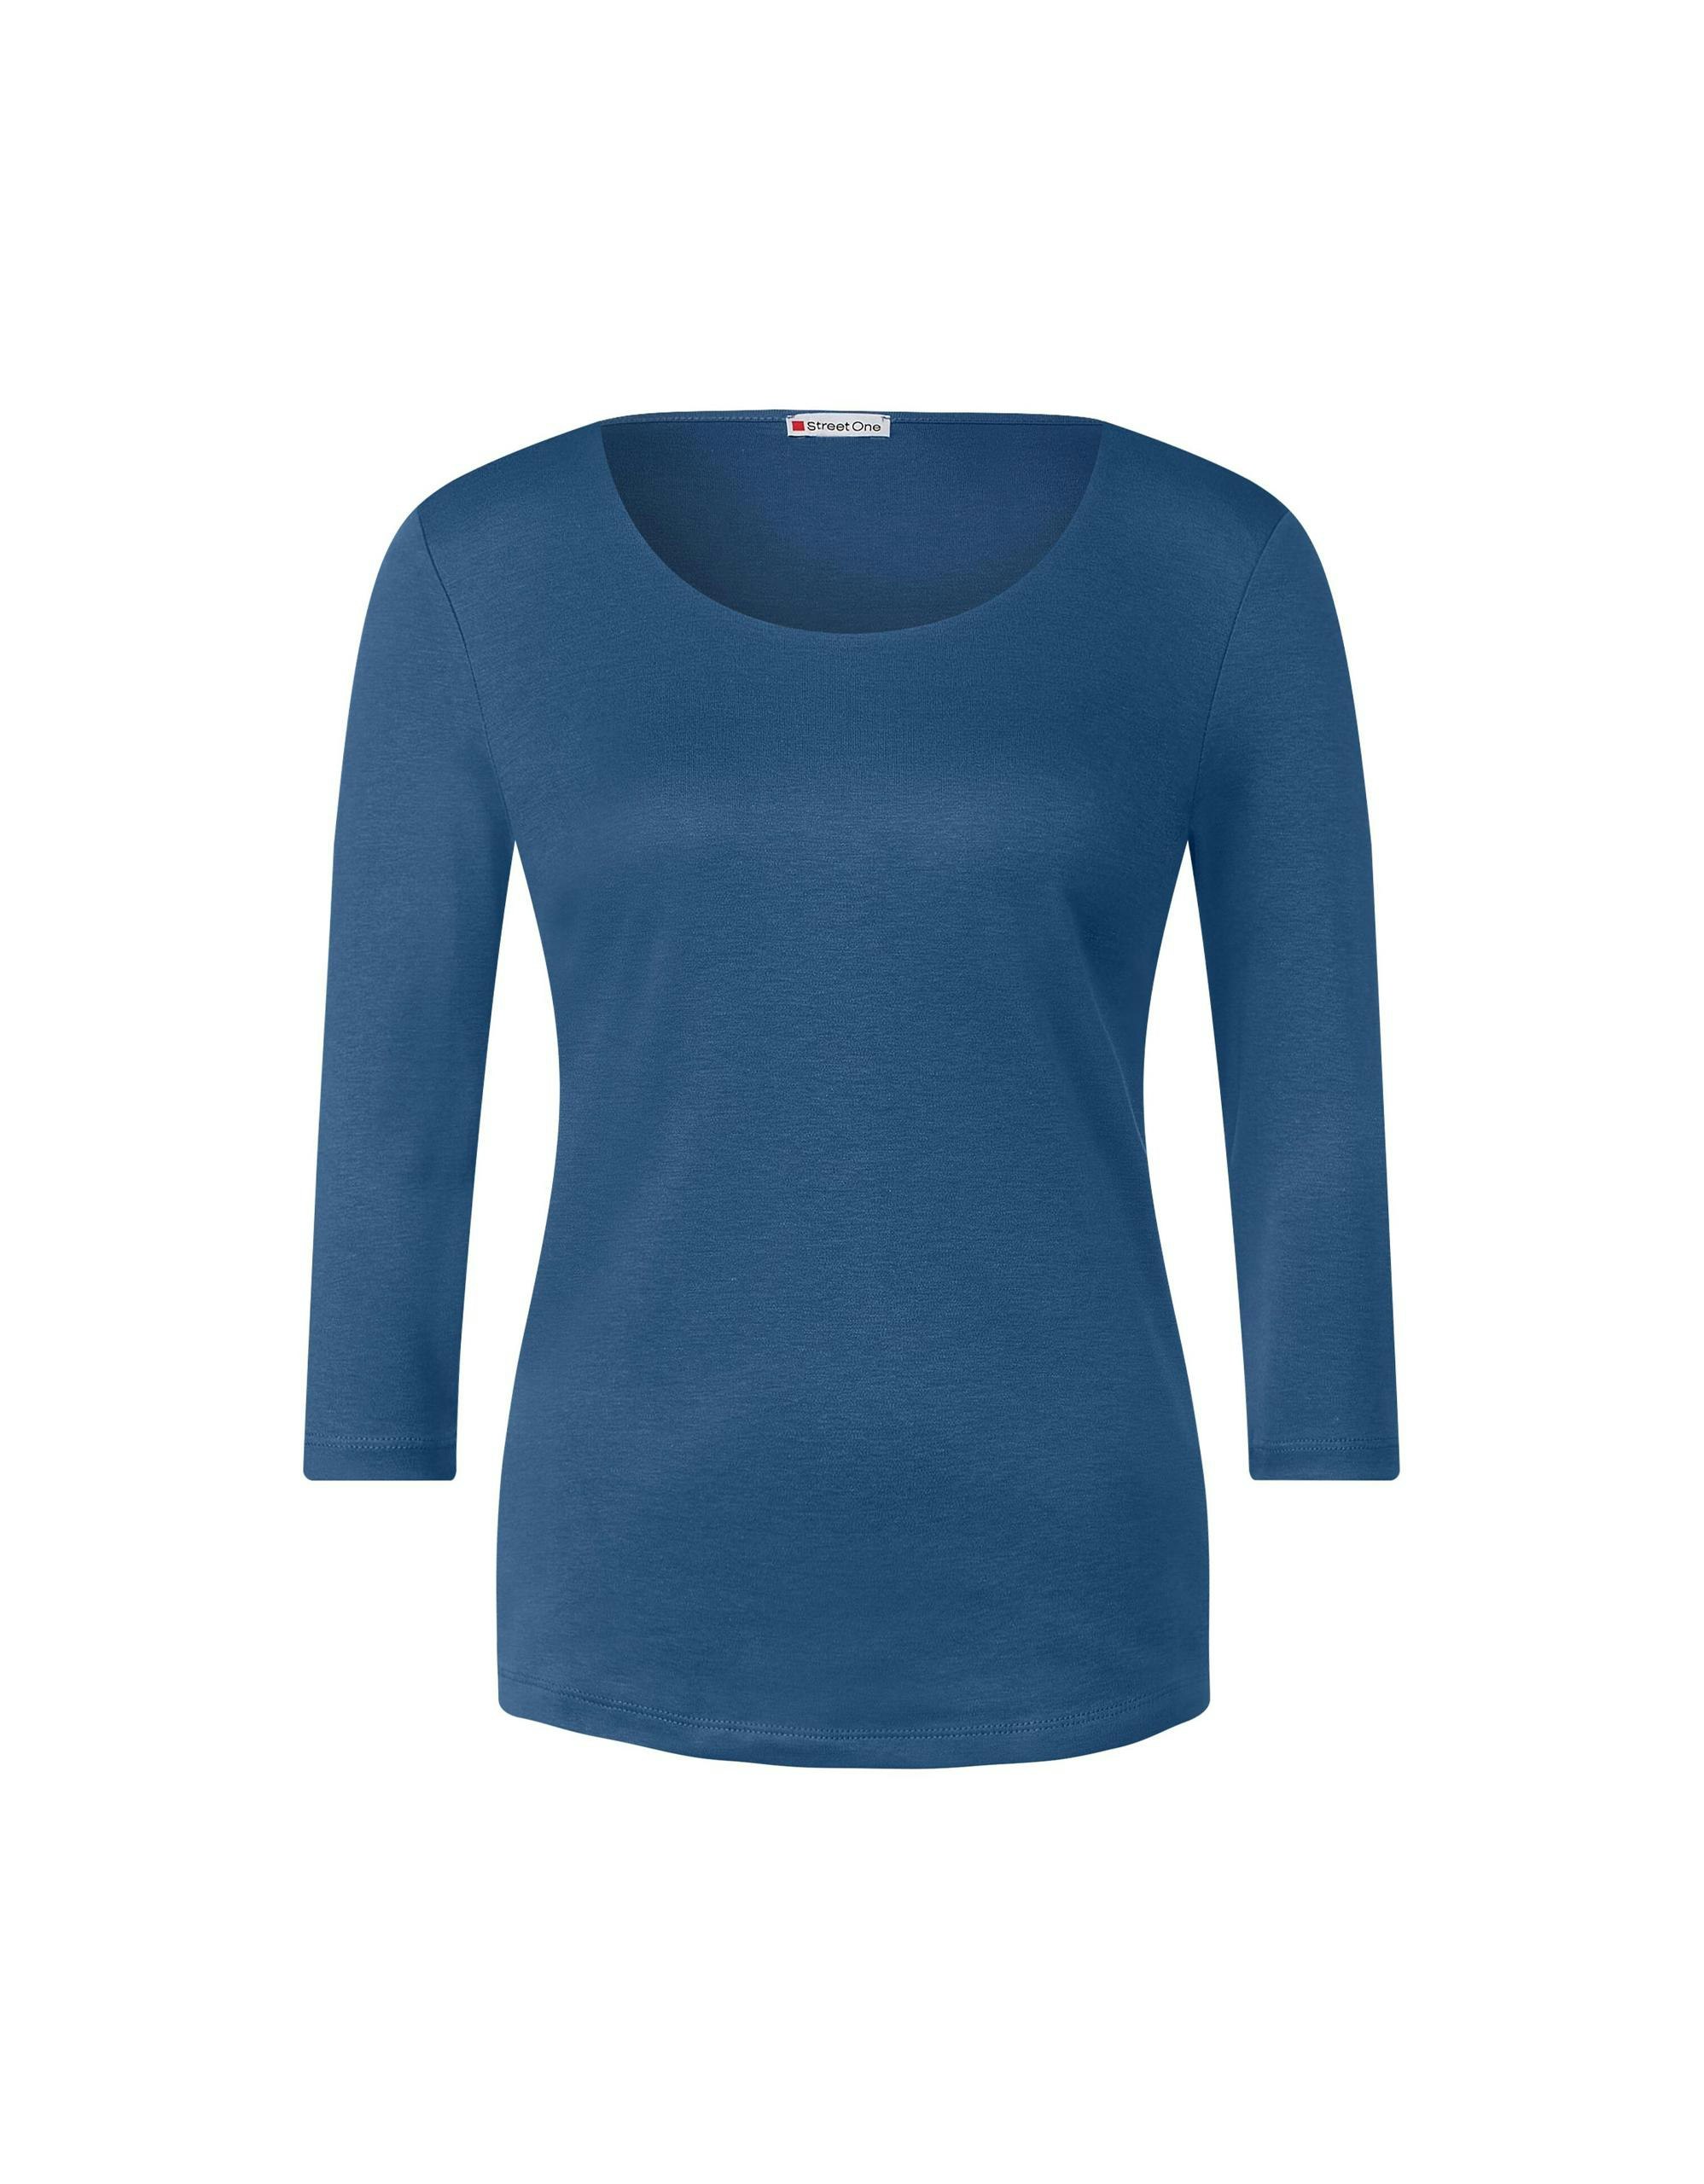 Shirt in Unifarbe | Mode | ADLER Street One Onlineshop